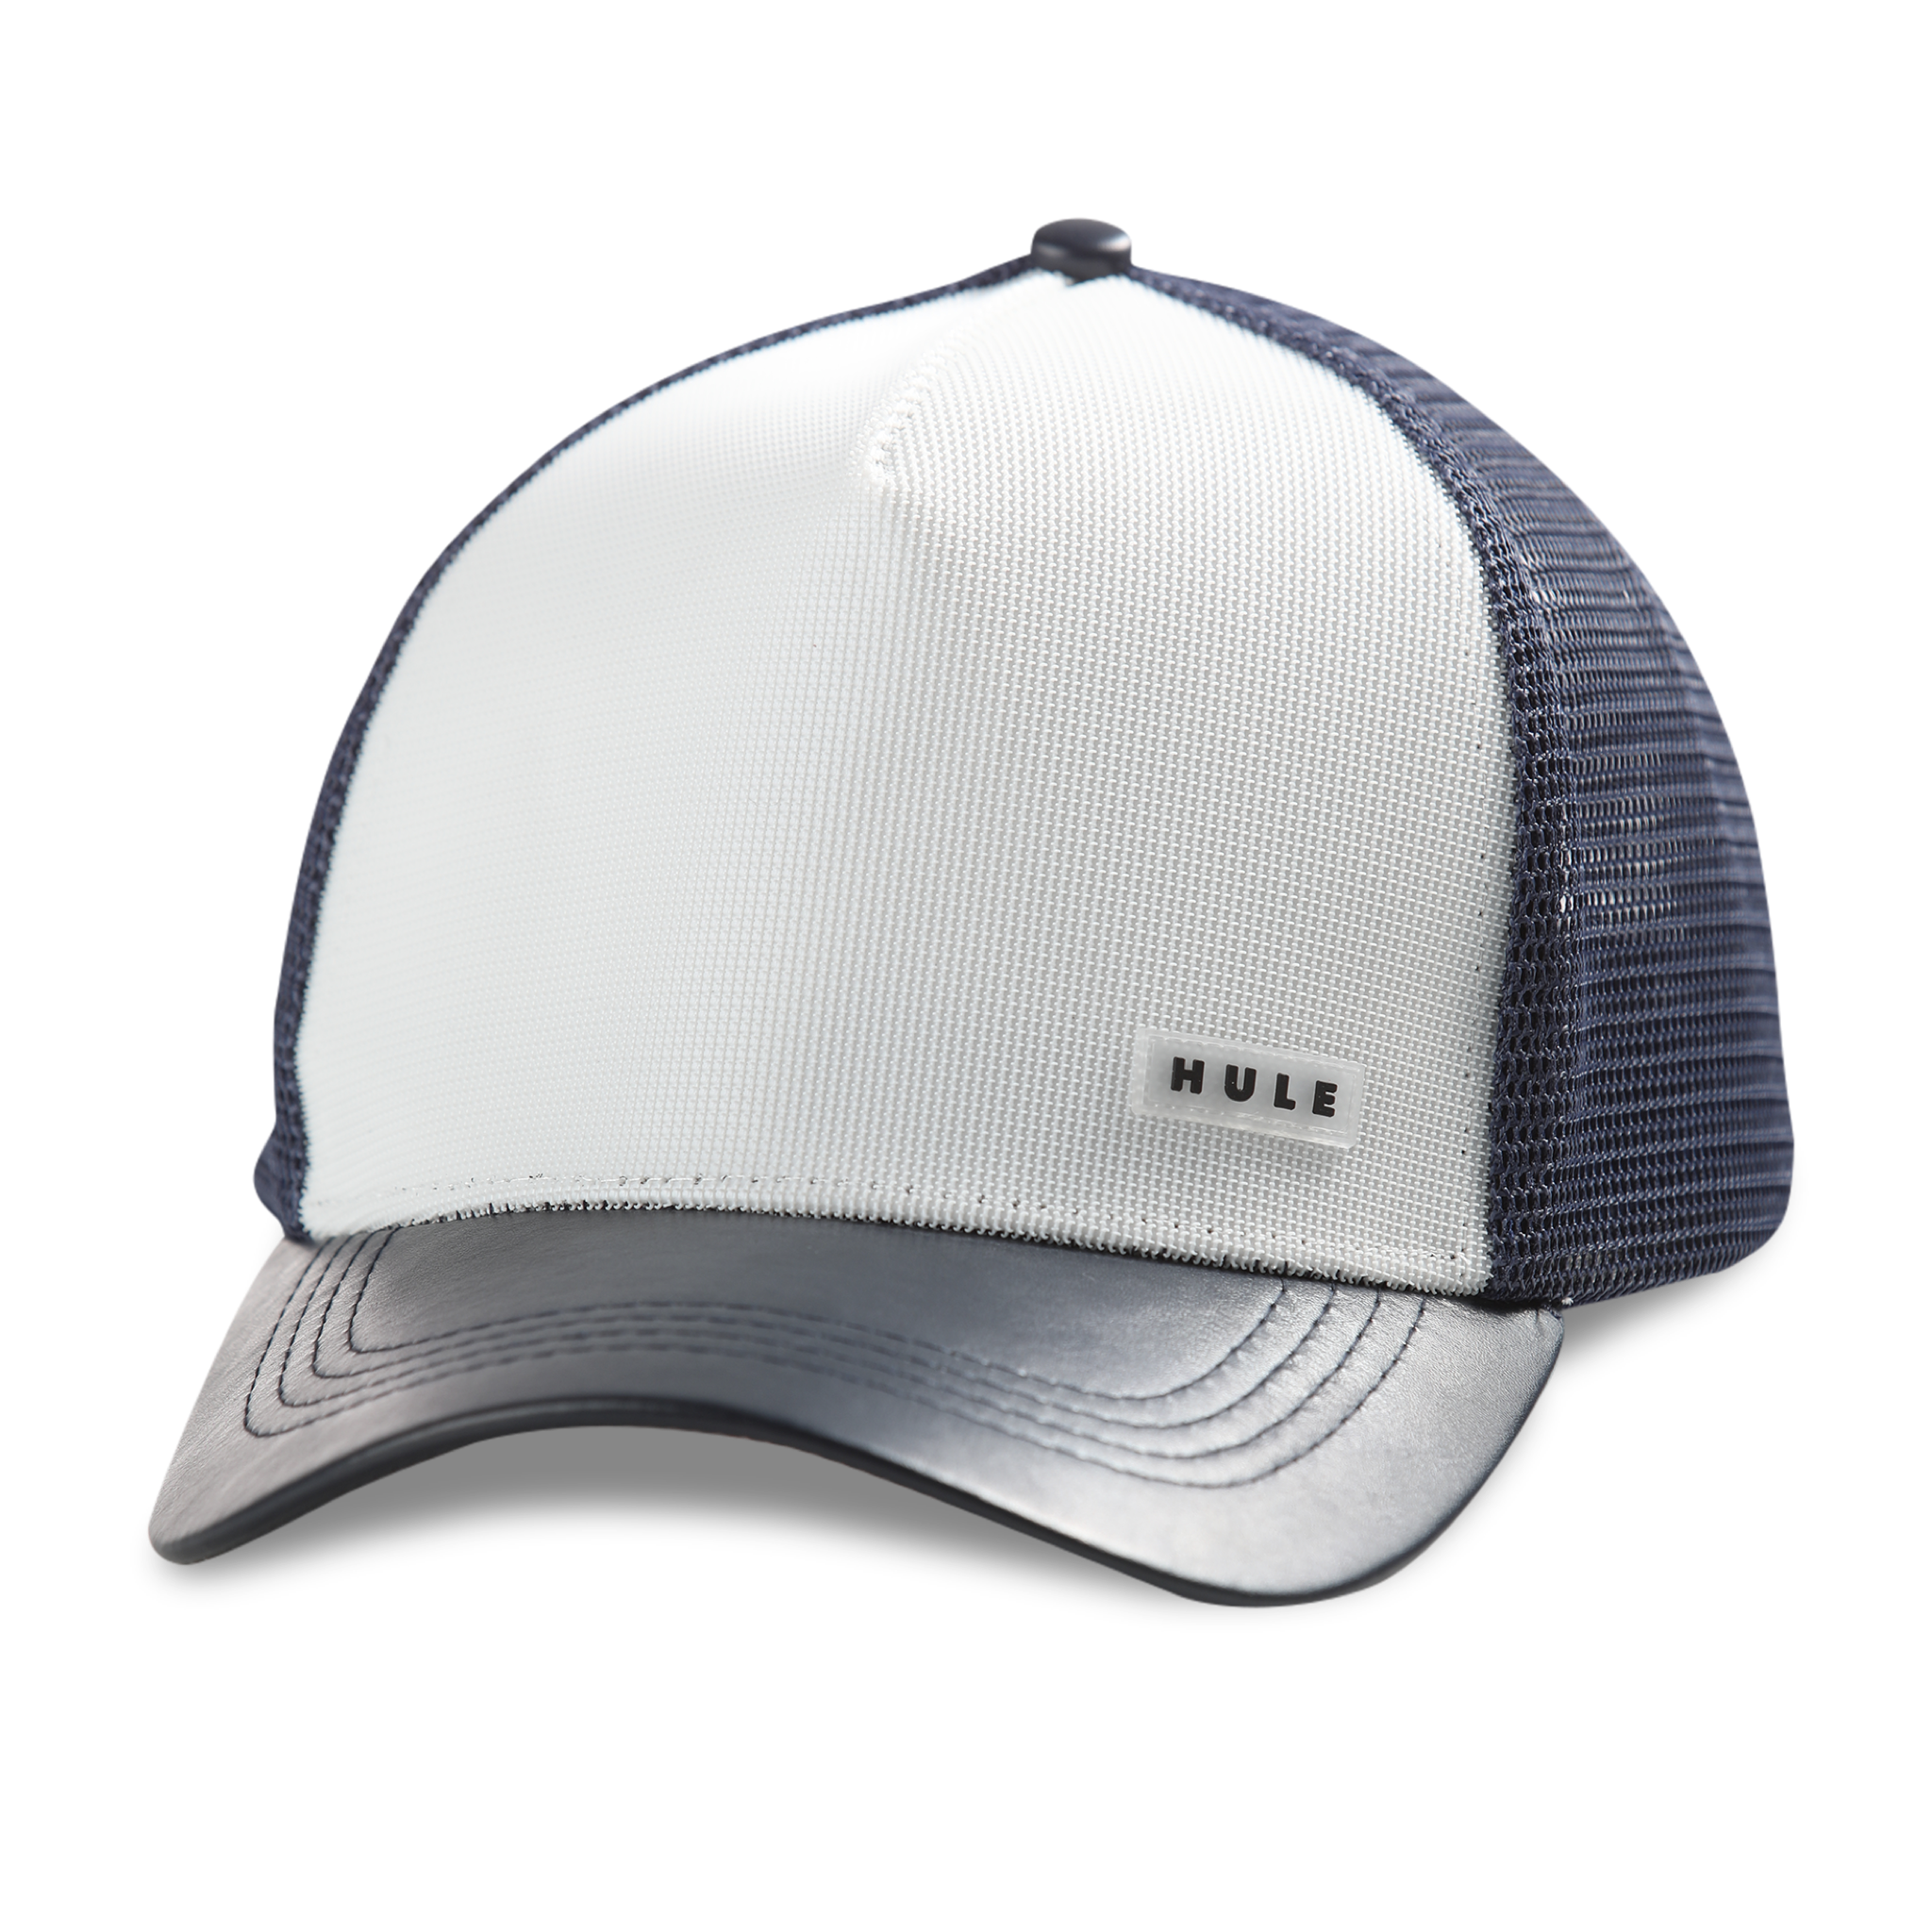 NEW!! Navy Blue Premium Hule Trucker Hat